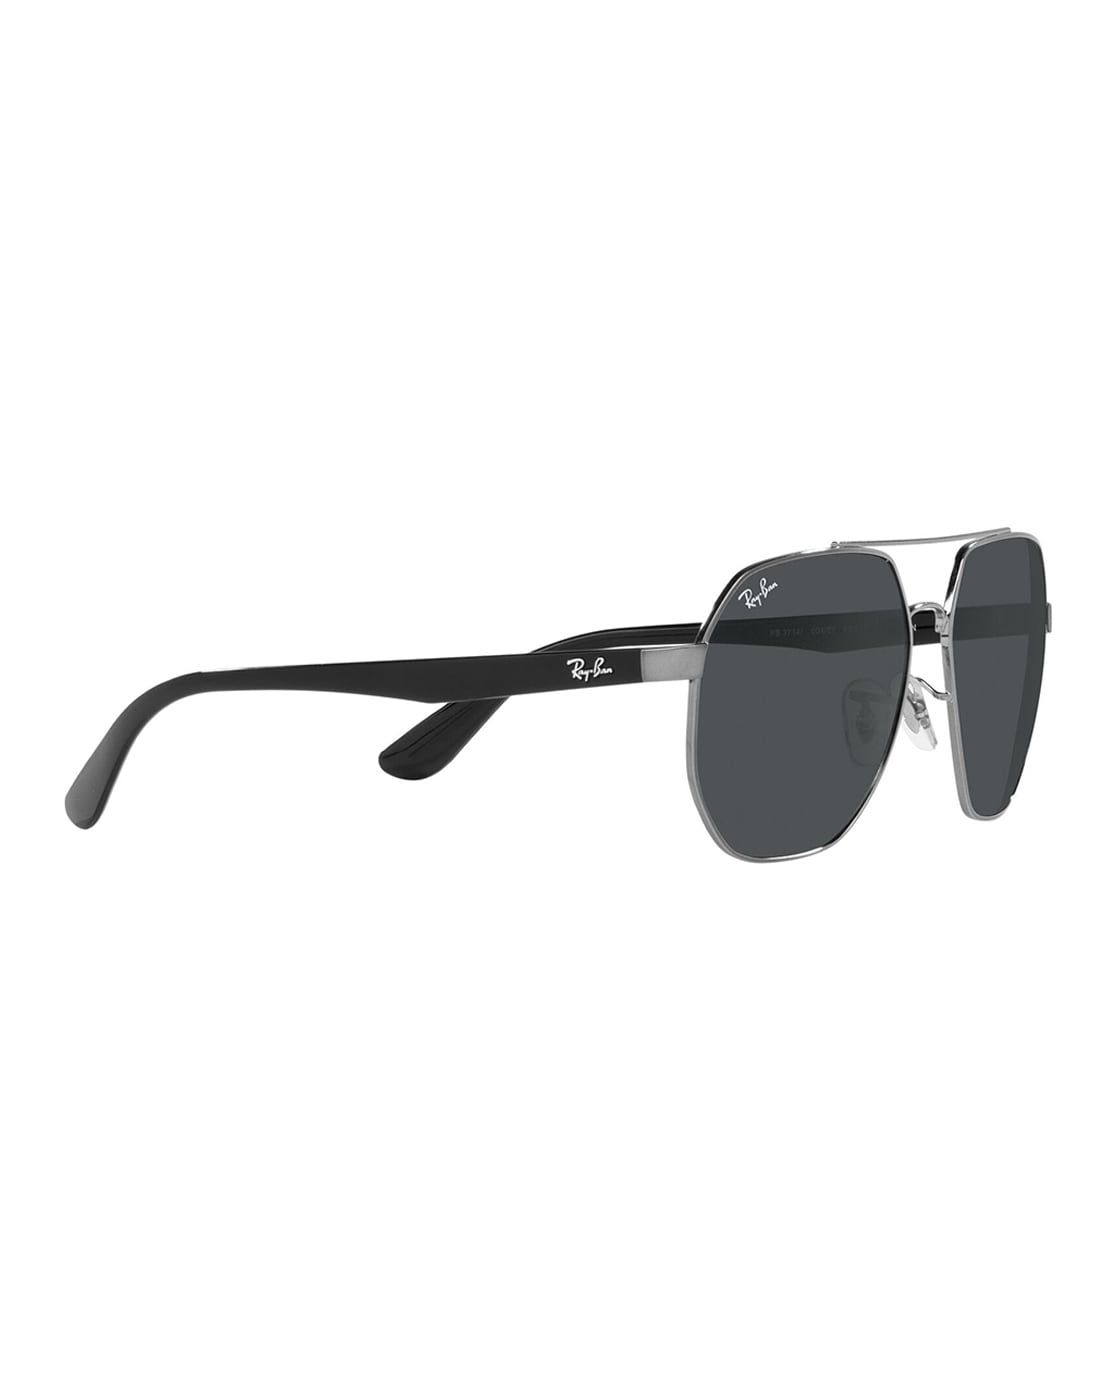 Rayban Sunglasses at Flat 30% off from Flipkart +15% CitiBank Cards